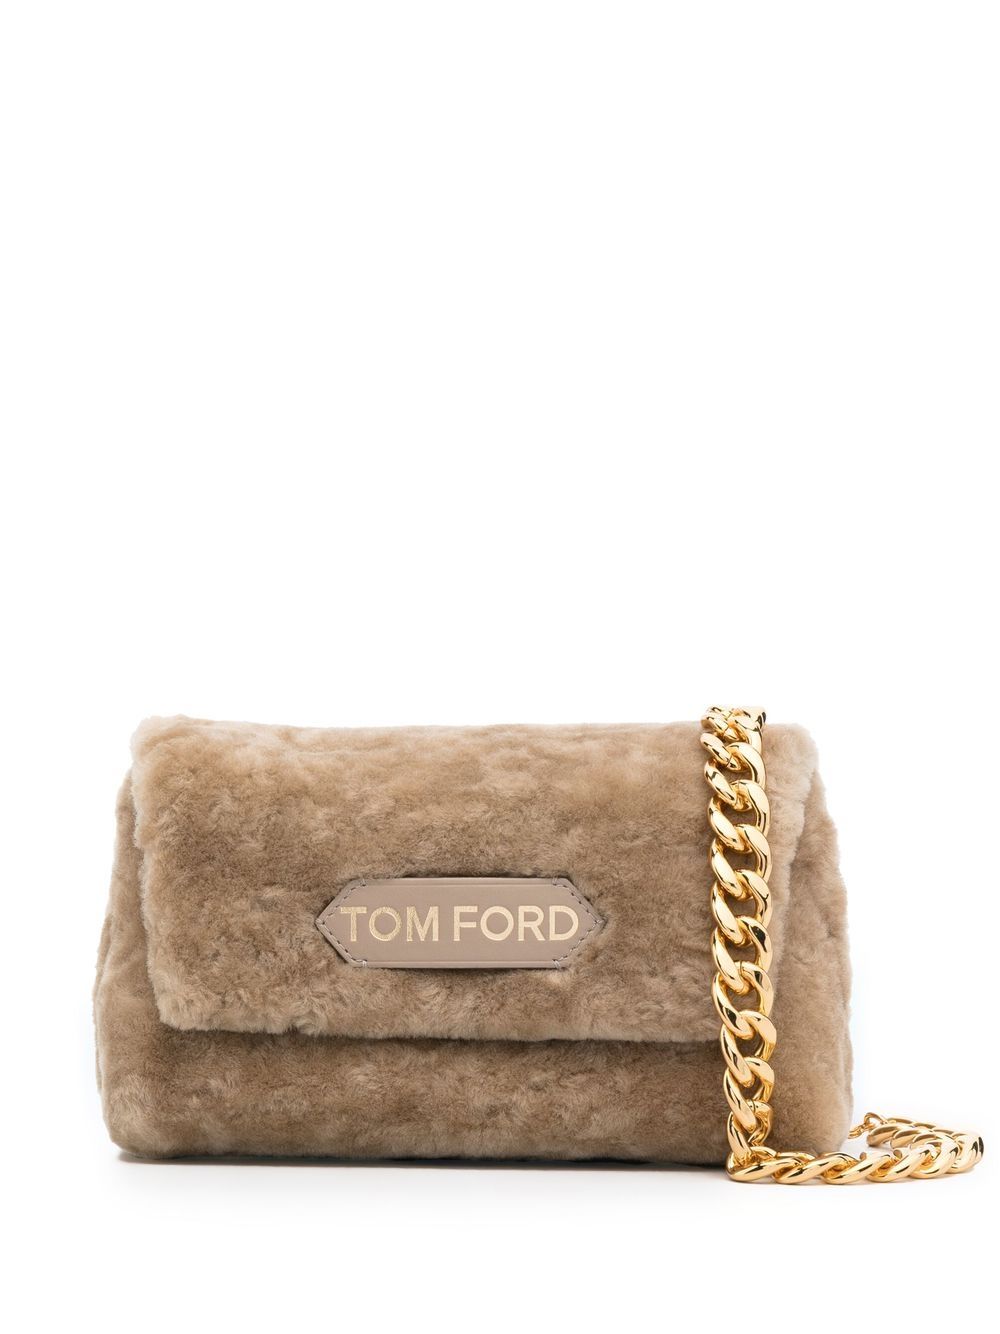 Tom Ford Mini Label Shearling Bag In Neutrals